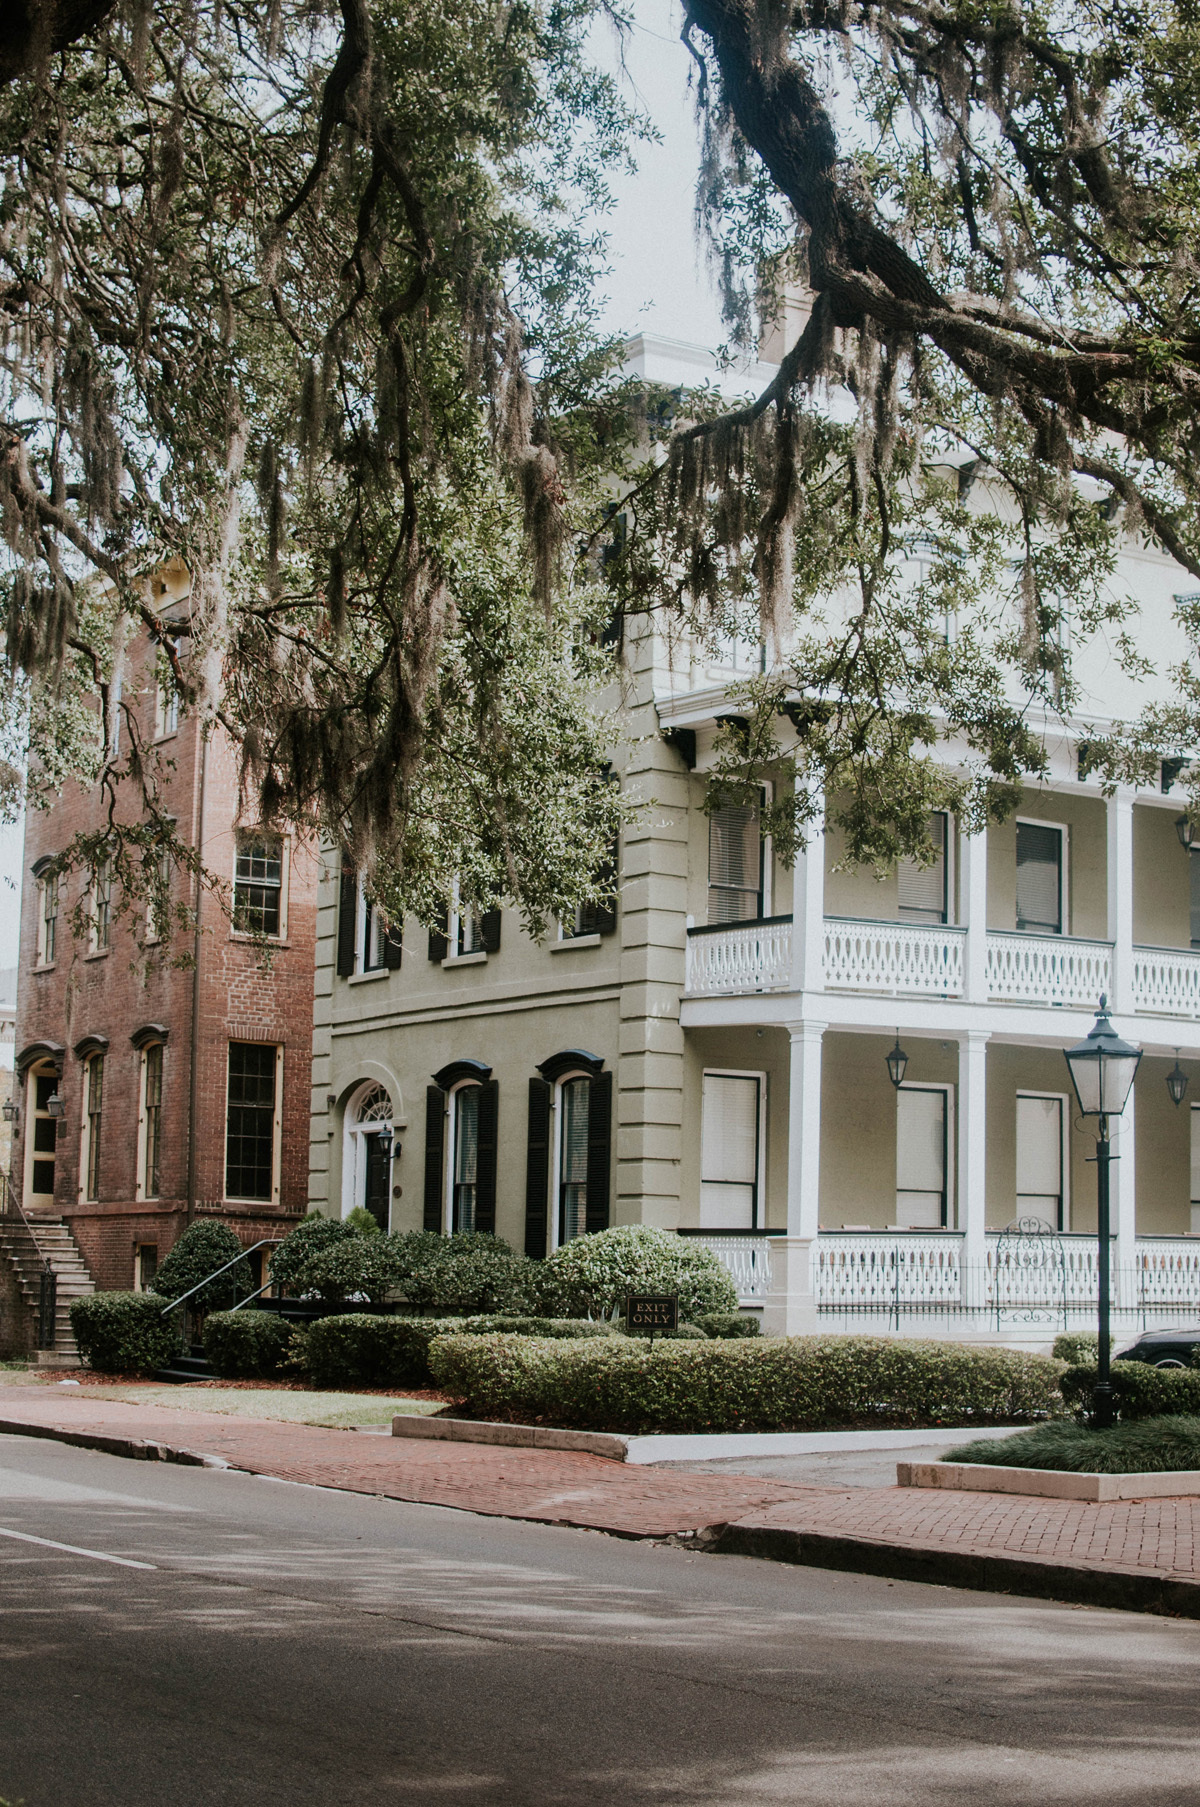 Picture of gorgeous old home in Savannah taken by interviewed photographer, Jessica Furtney #savannahGA #jessicafurtney